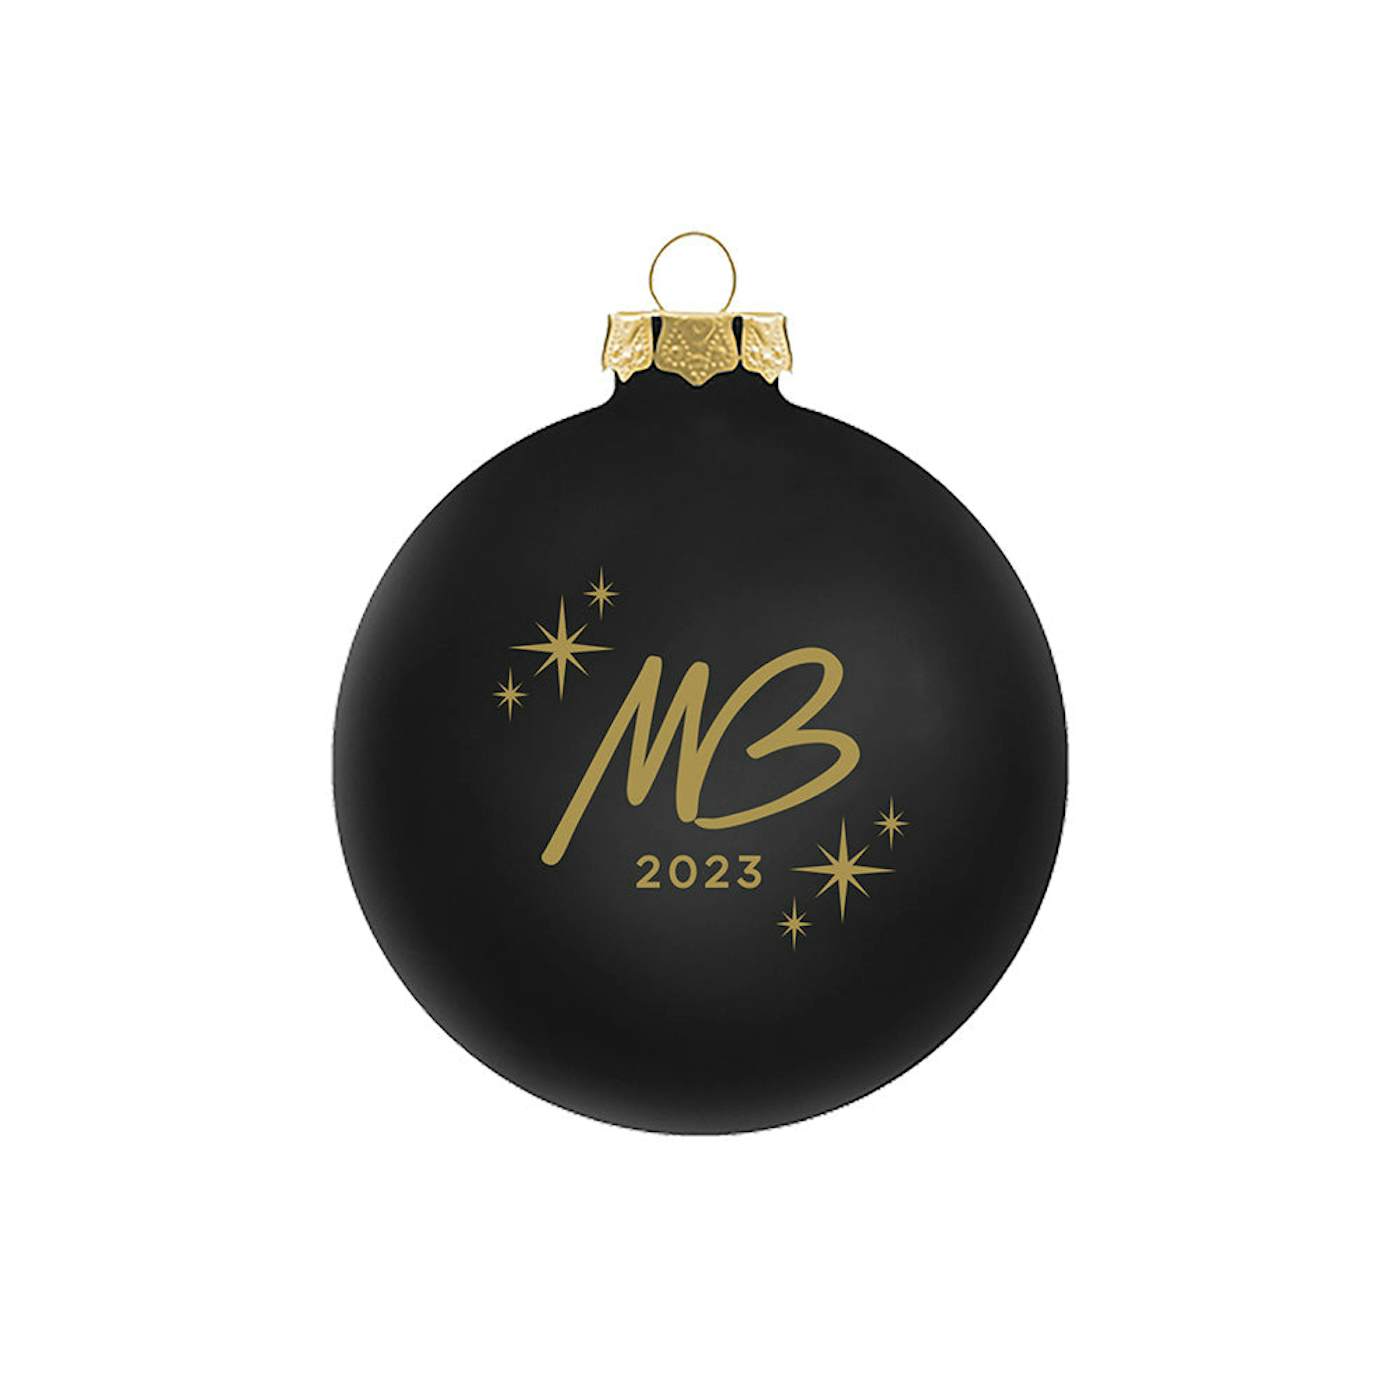 Michael Bublé 2023 Initials Christmas Ornament